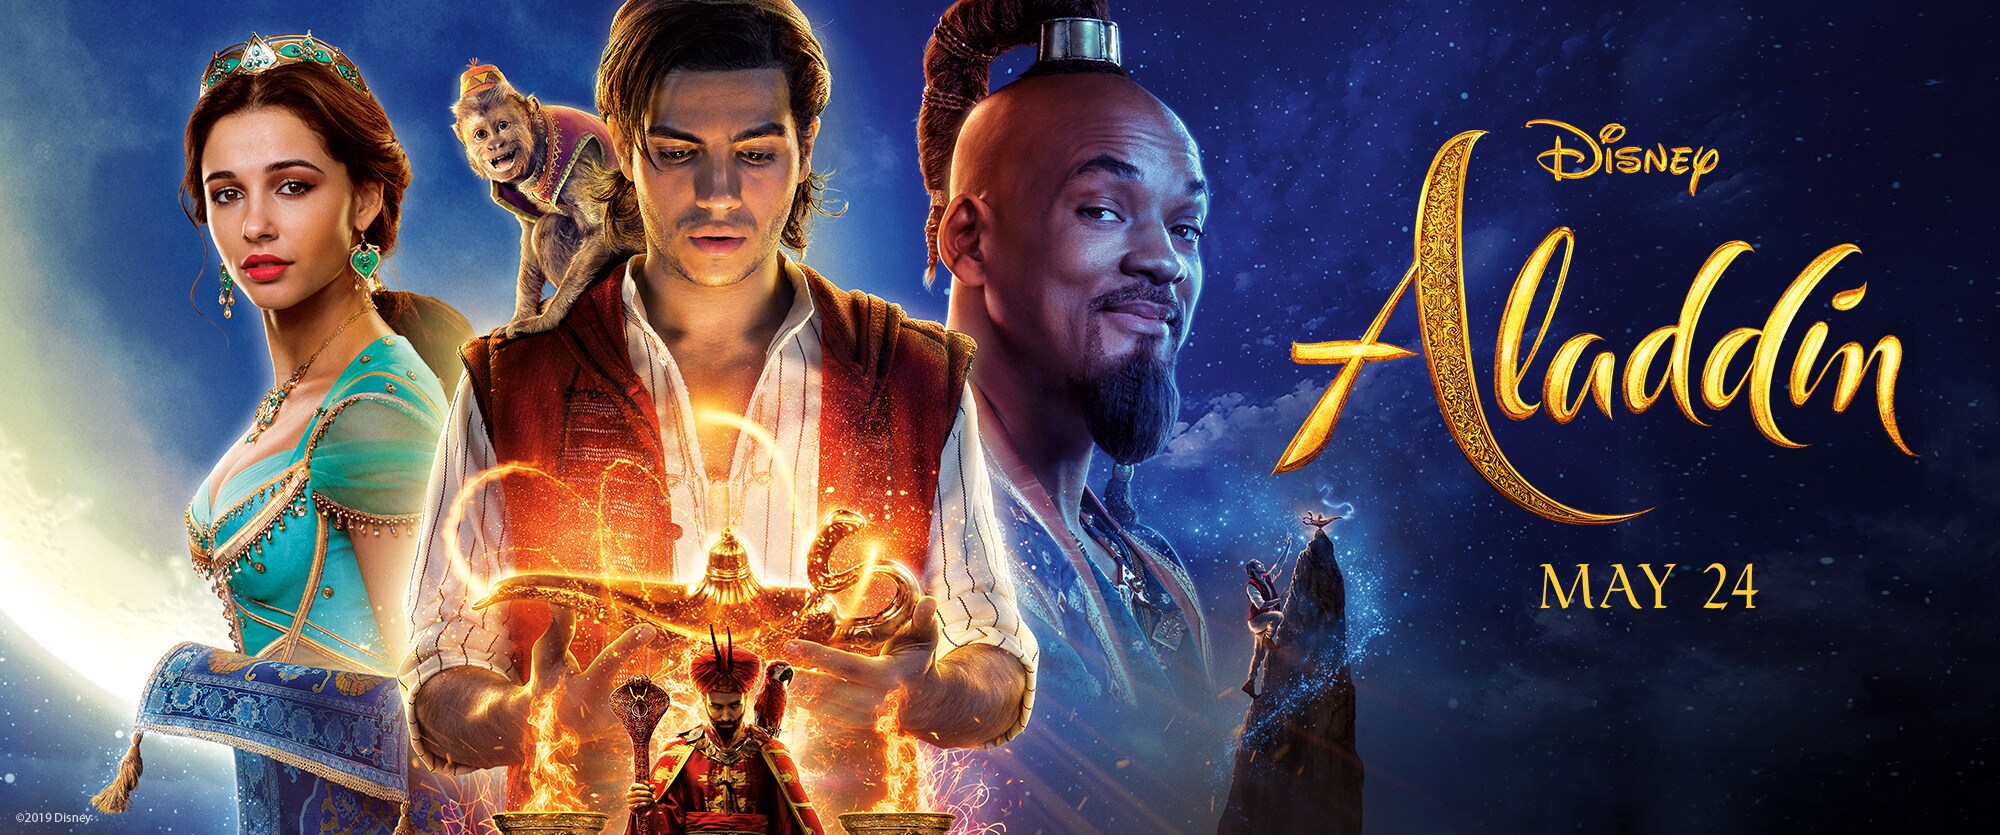 Aladdin_Movie Page_Hero Banner Testing